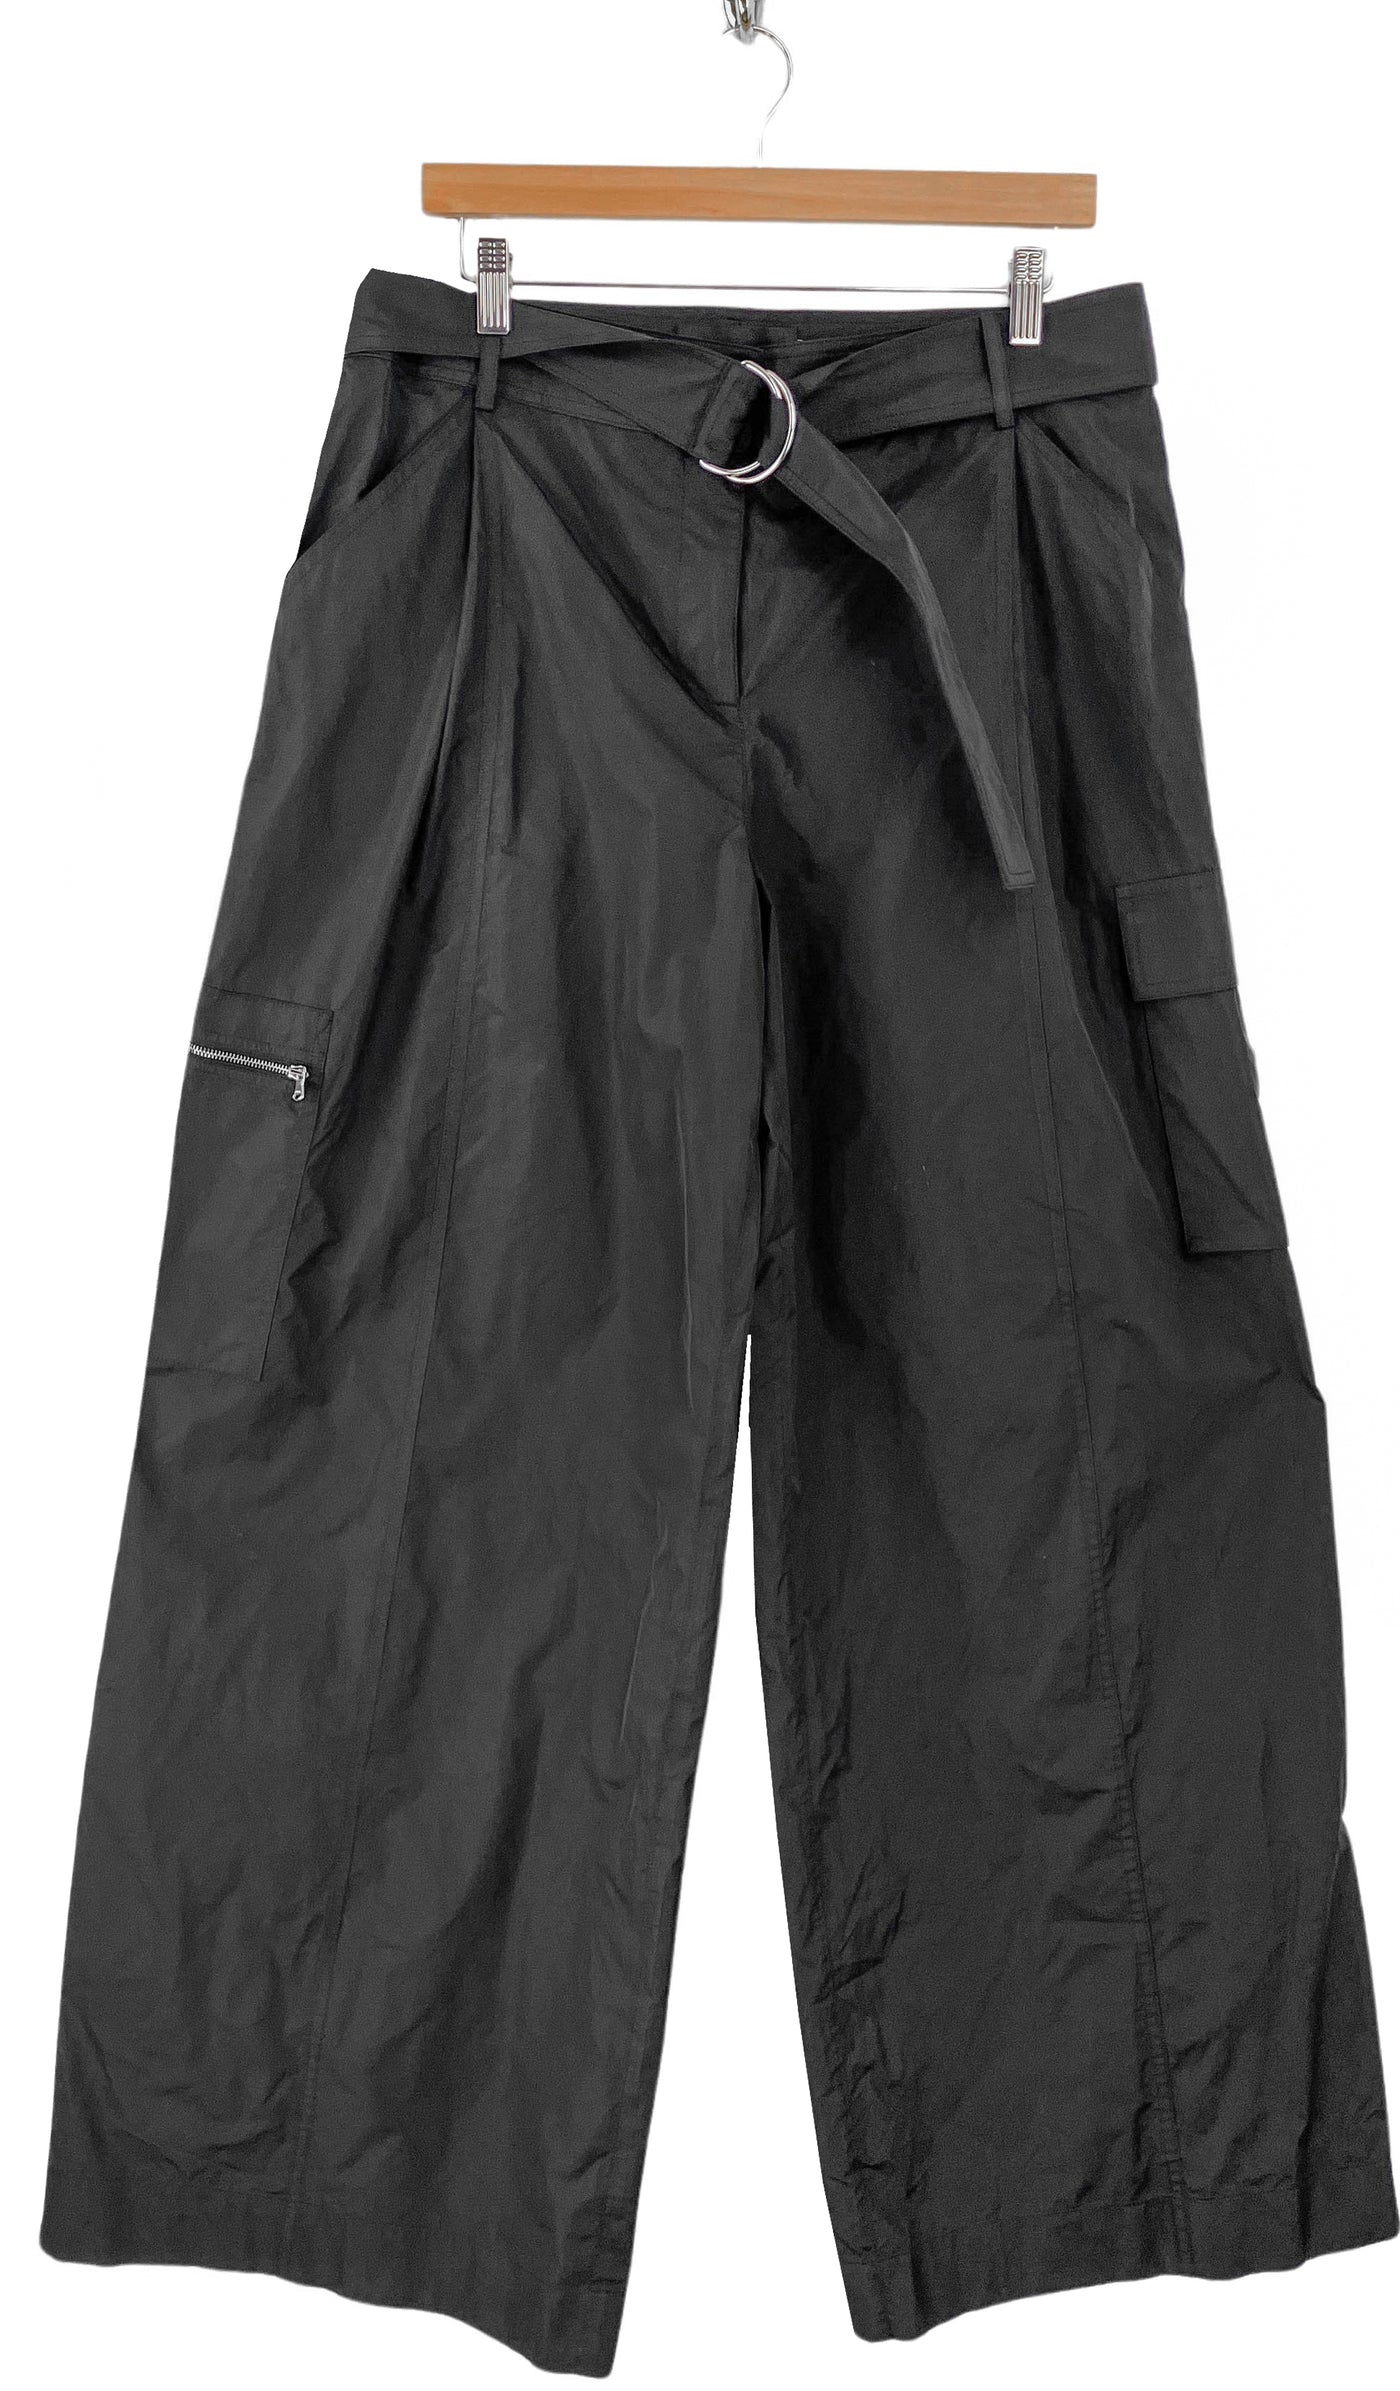 Brandon Maxwell The Kinslee Cargo Pants in Black - Discounts on Brandon Maxwell at UAL